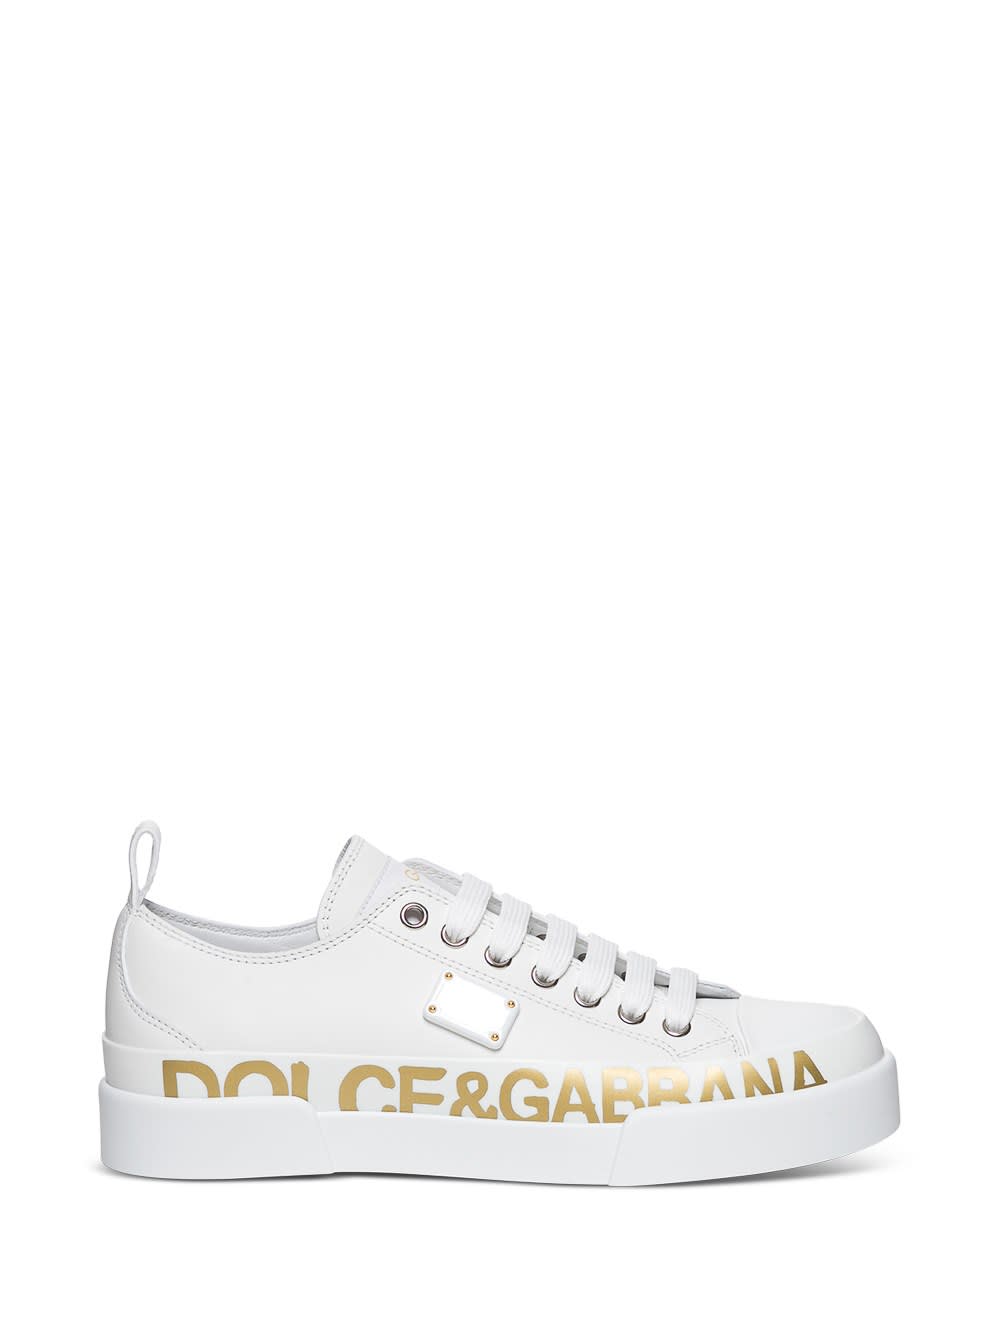 Dolce & Gabbana Portofino Light Leather Sneakers With Logo